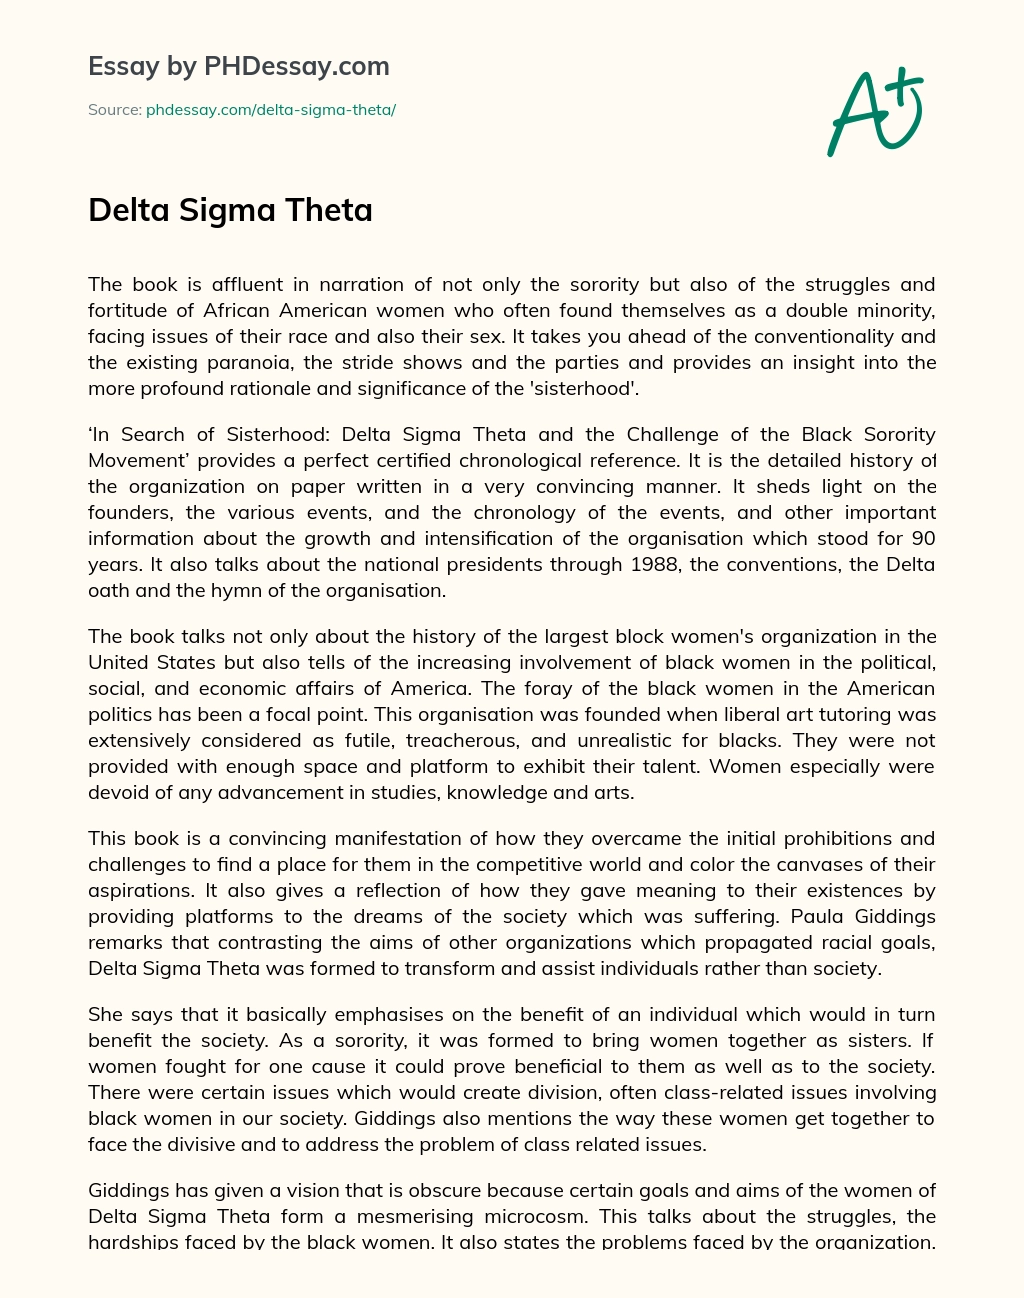 Delta Sigma Theta essay